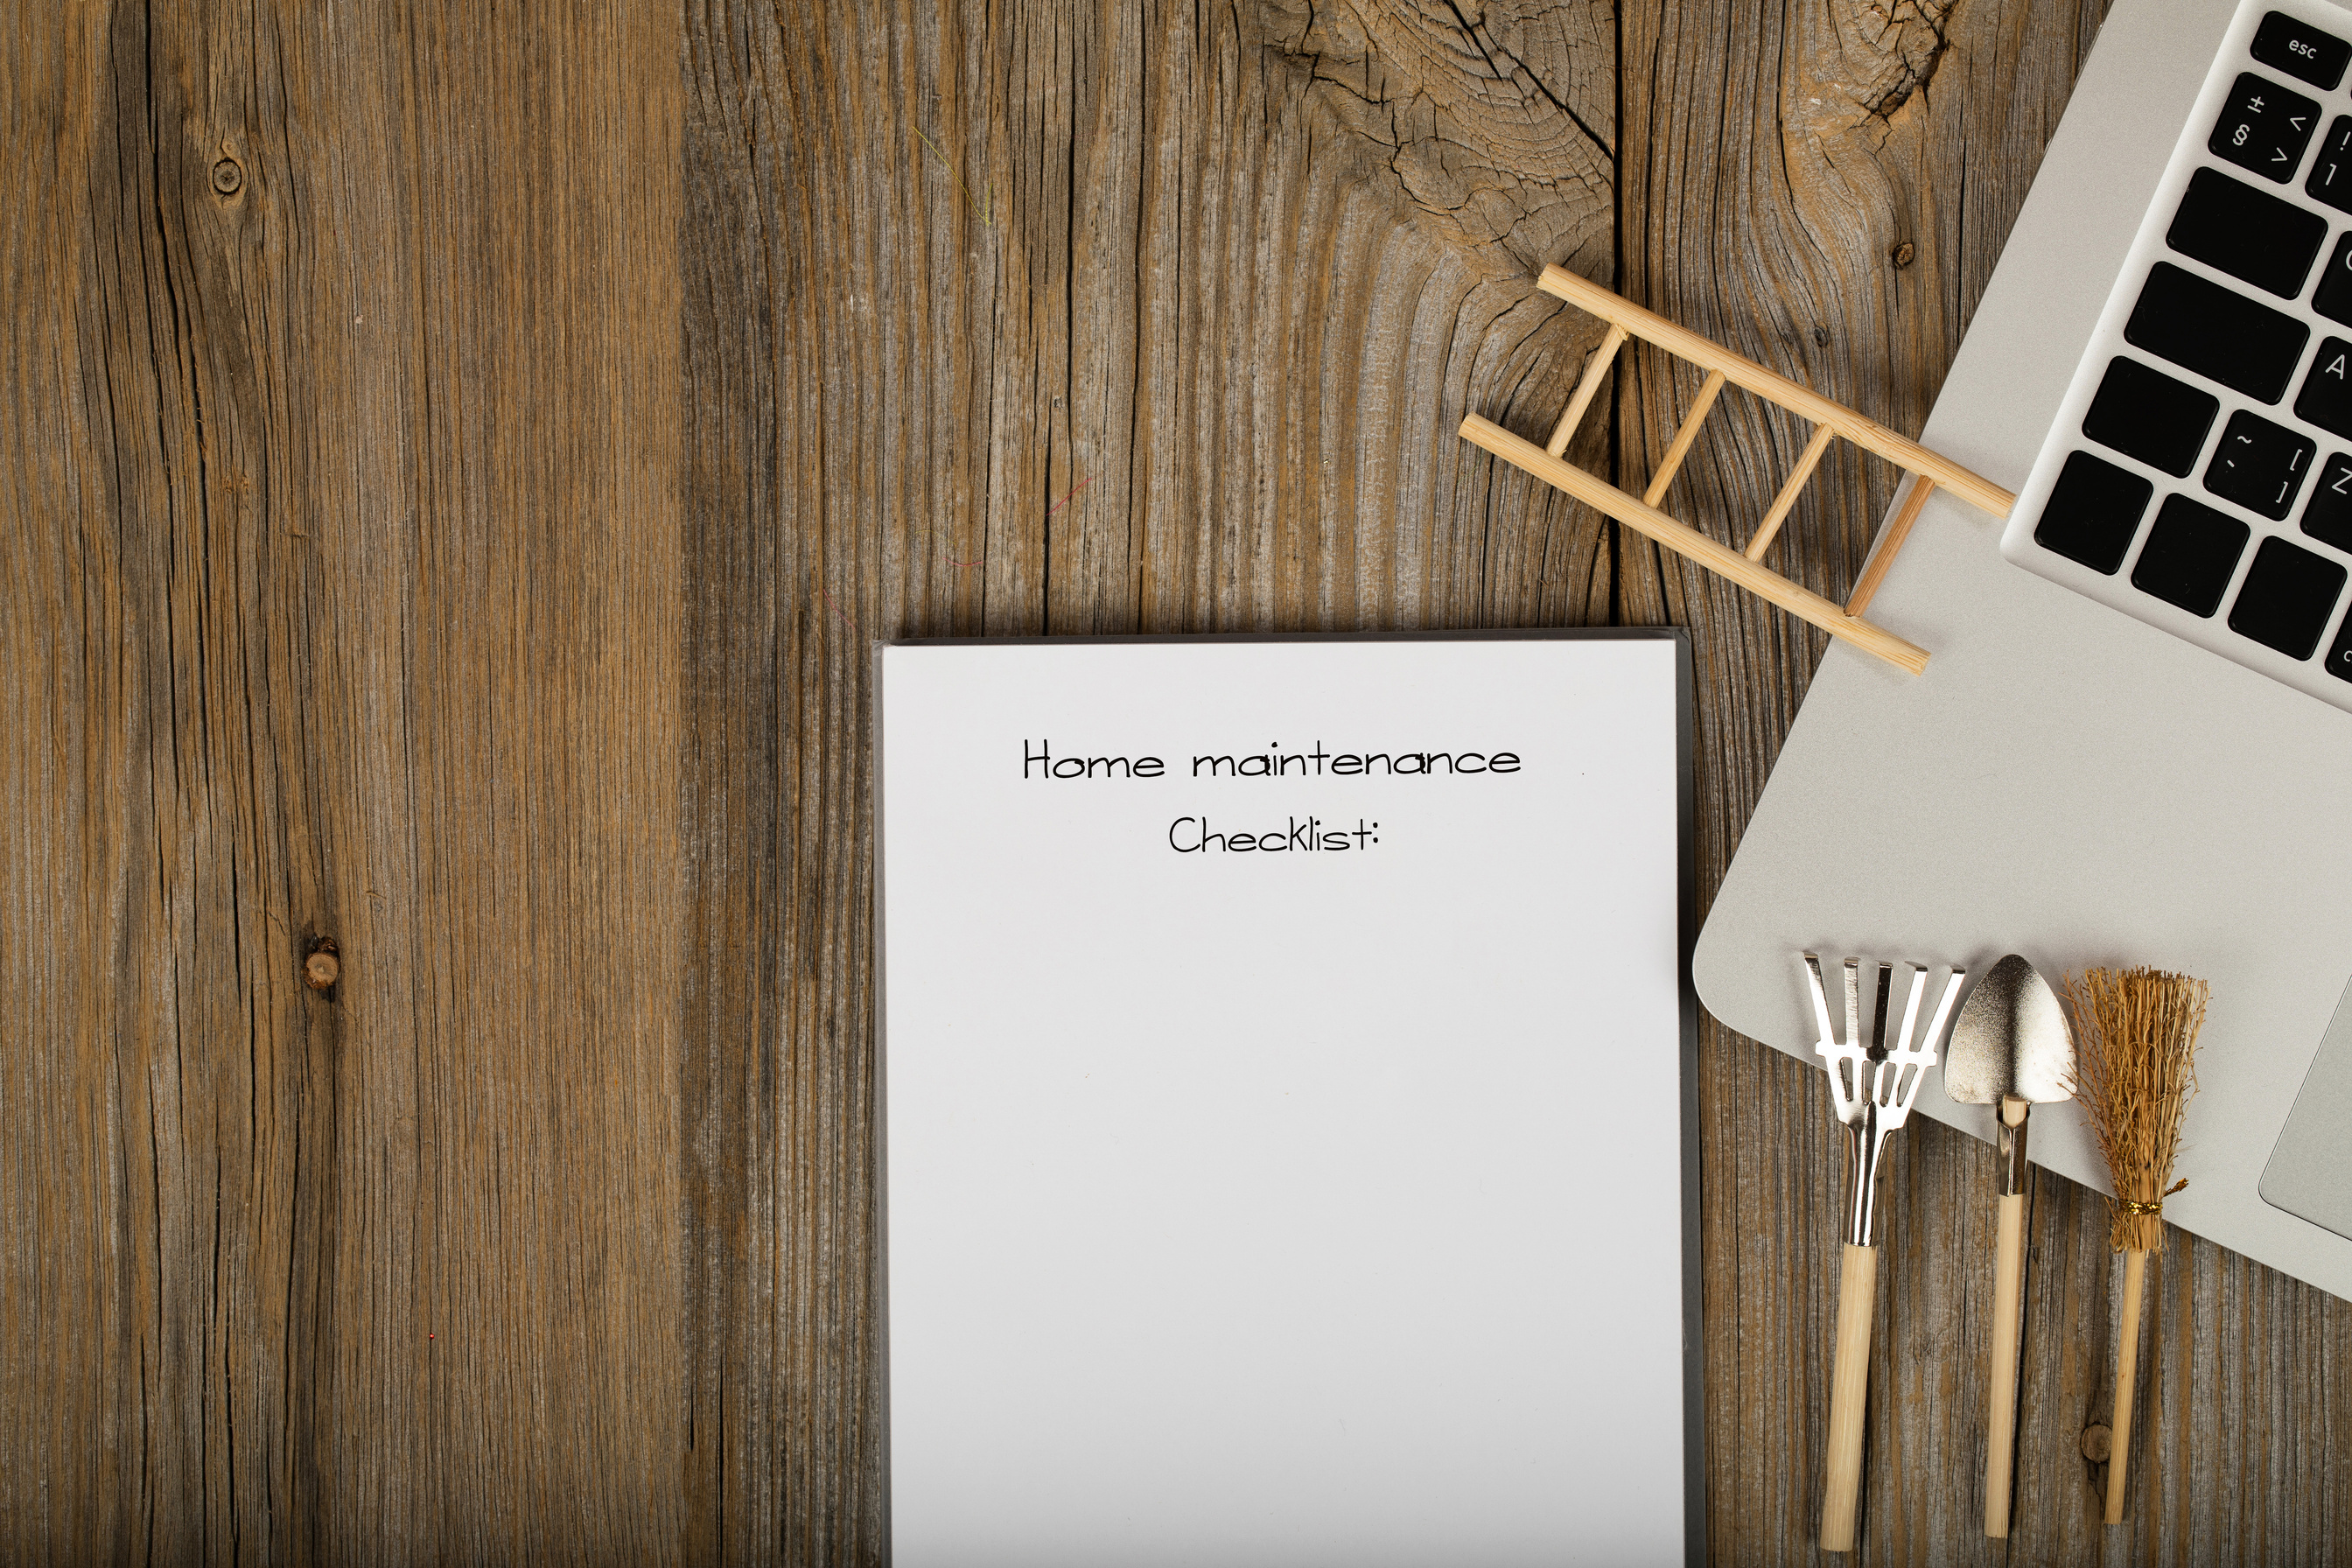 Home maintenance checklist.